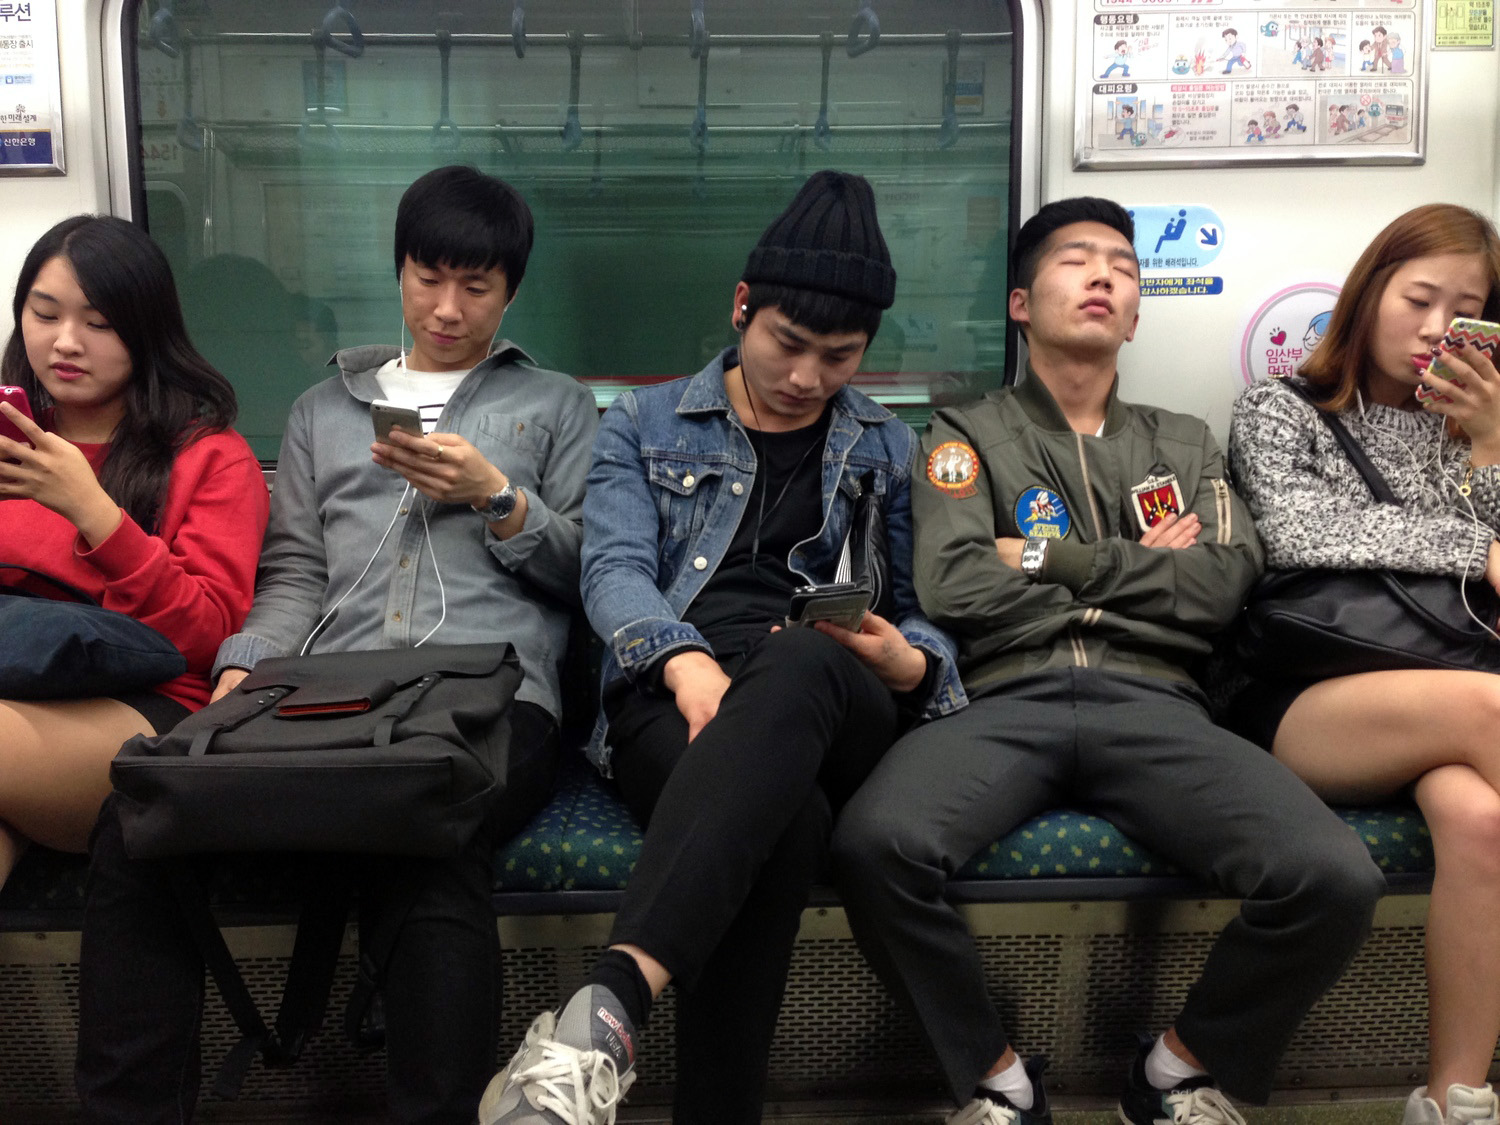 South Korea metro cell phones